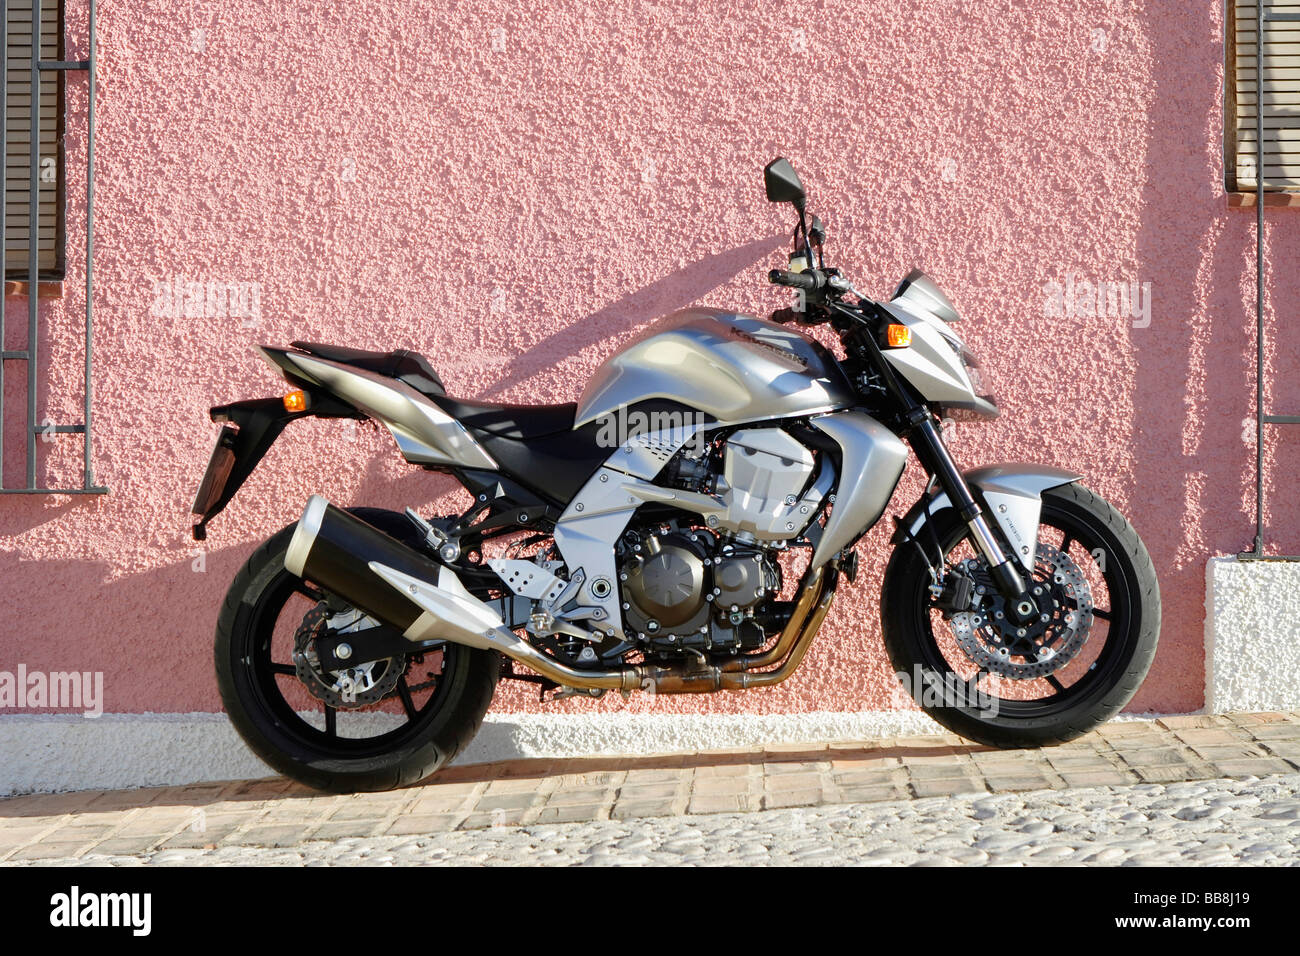 Kawasaki z750 motorcycle hi-res stock photography and images - Alamy